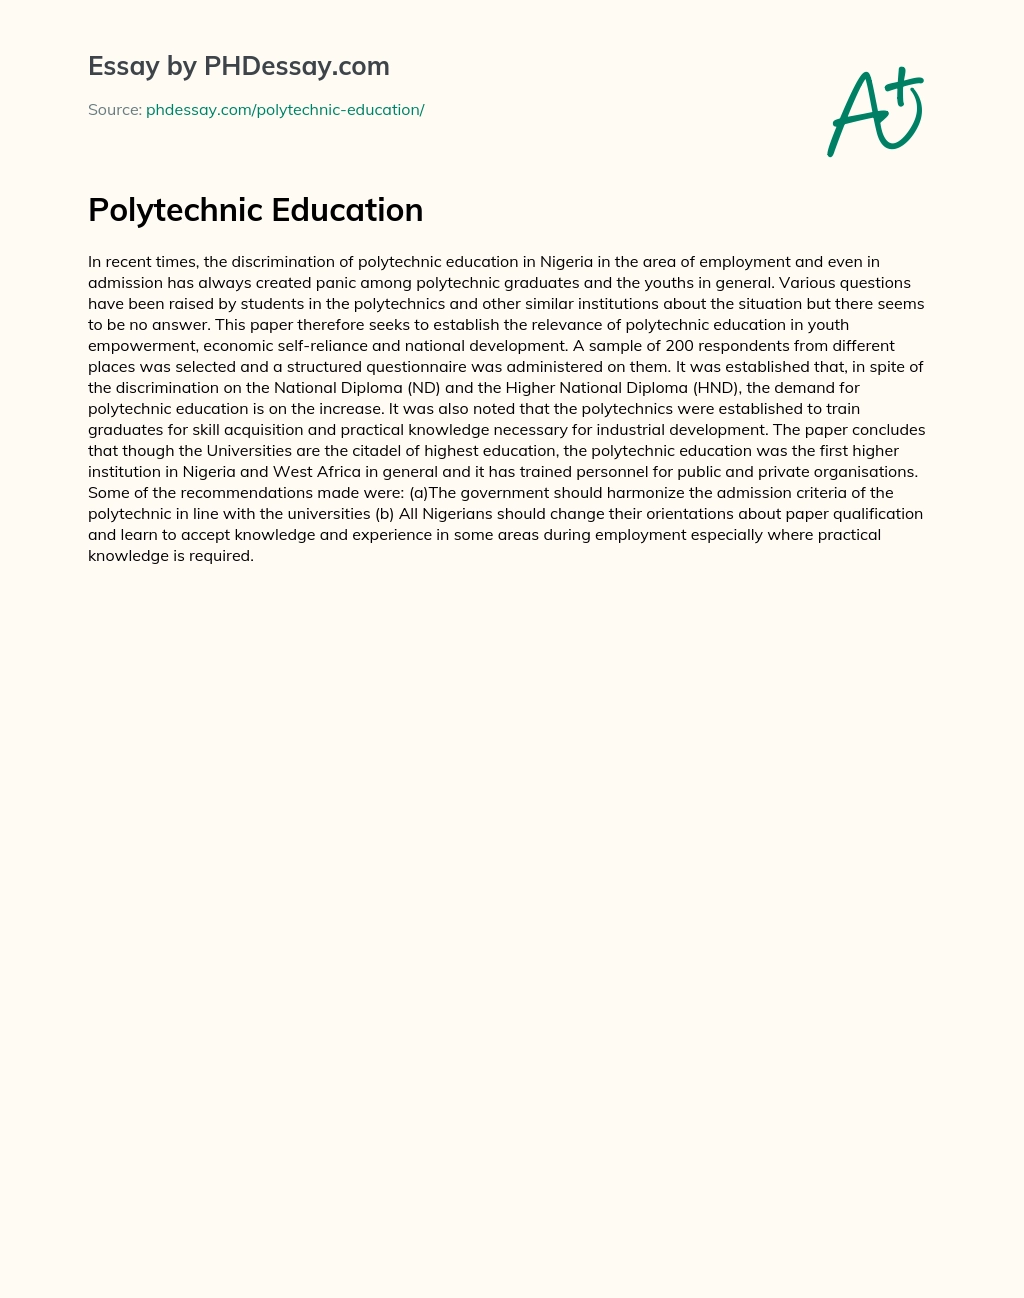 Polytechnic Education essay